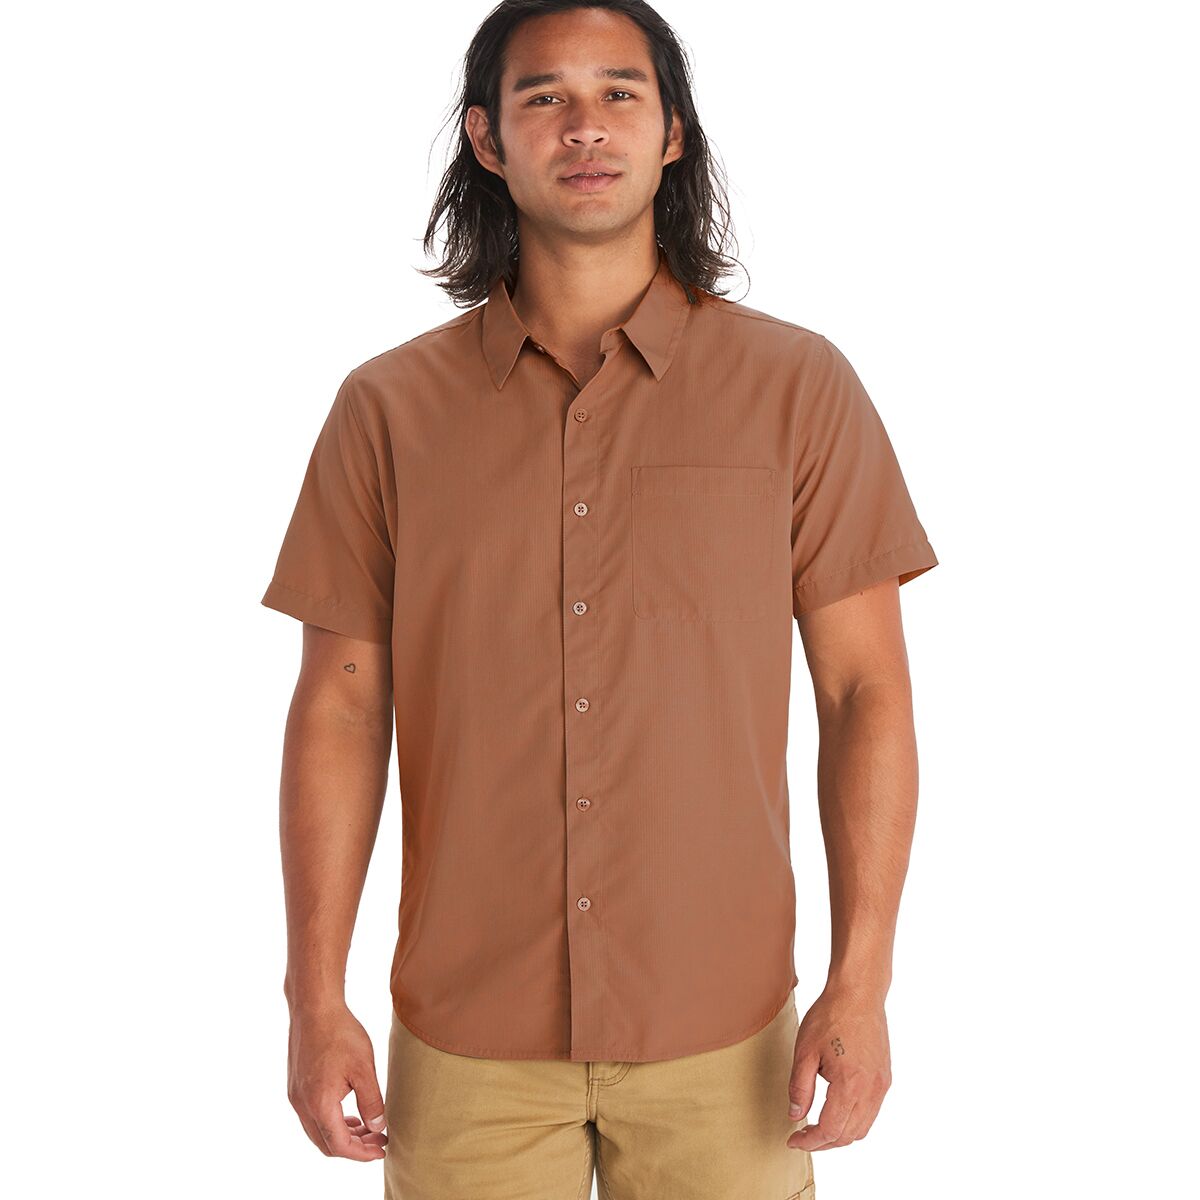 Aerobora Short-Sleeve Shirt - Men